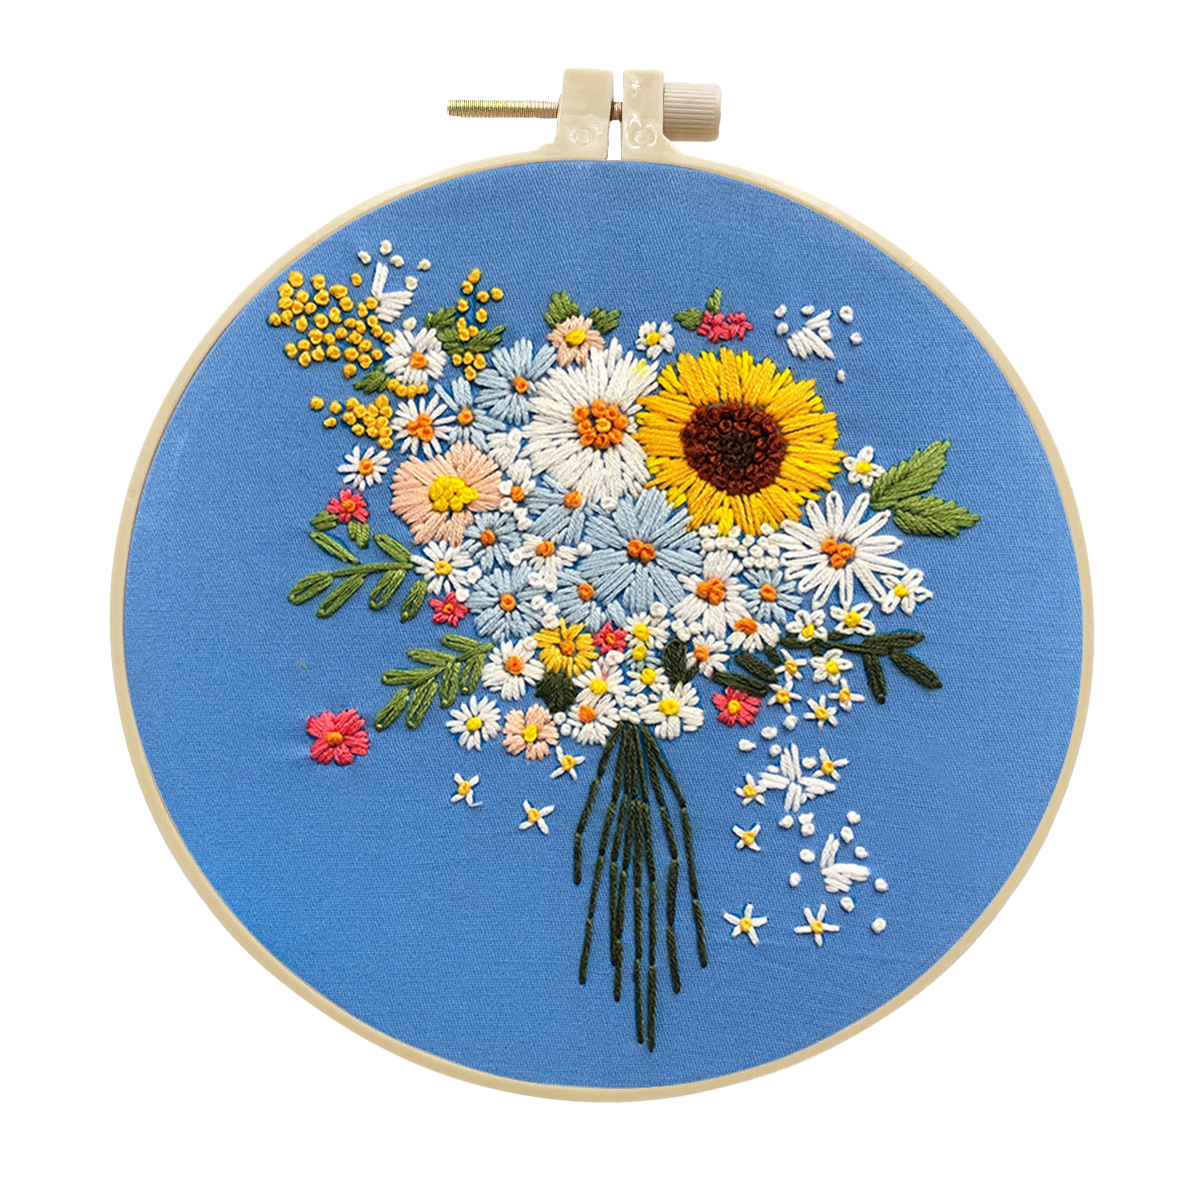 DIY Handmade Embroidery Kit Craft Cross Stitch Kits Beginner - Blooming Bouquet Pattern